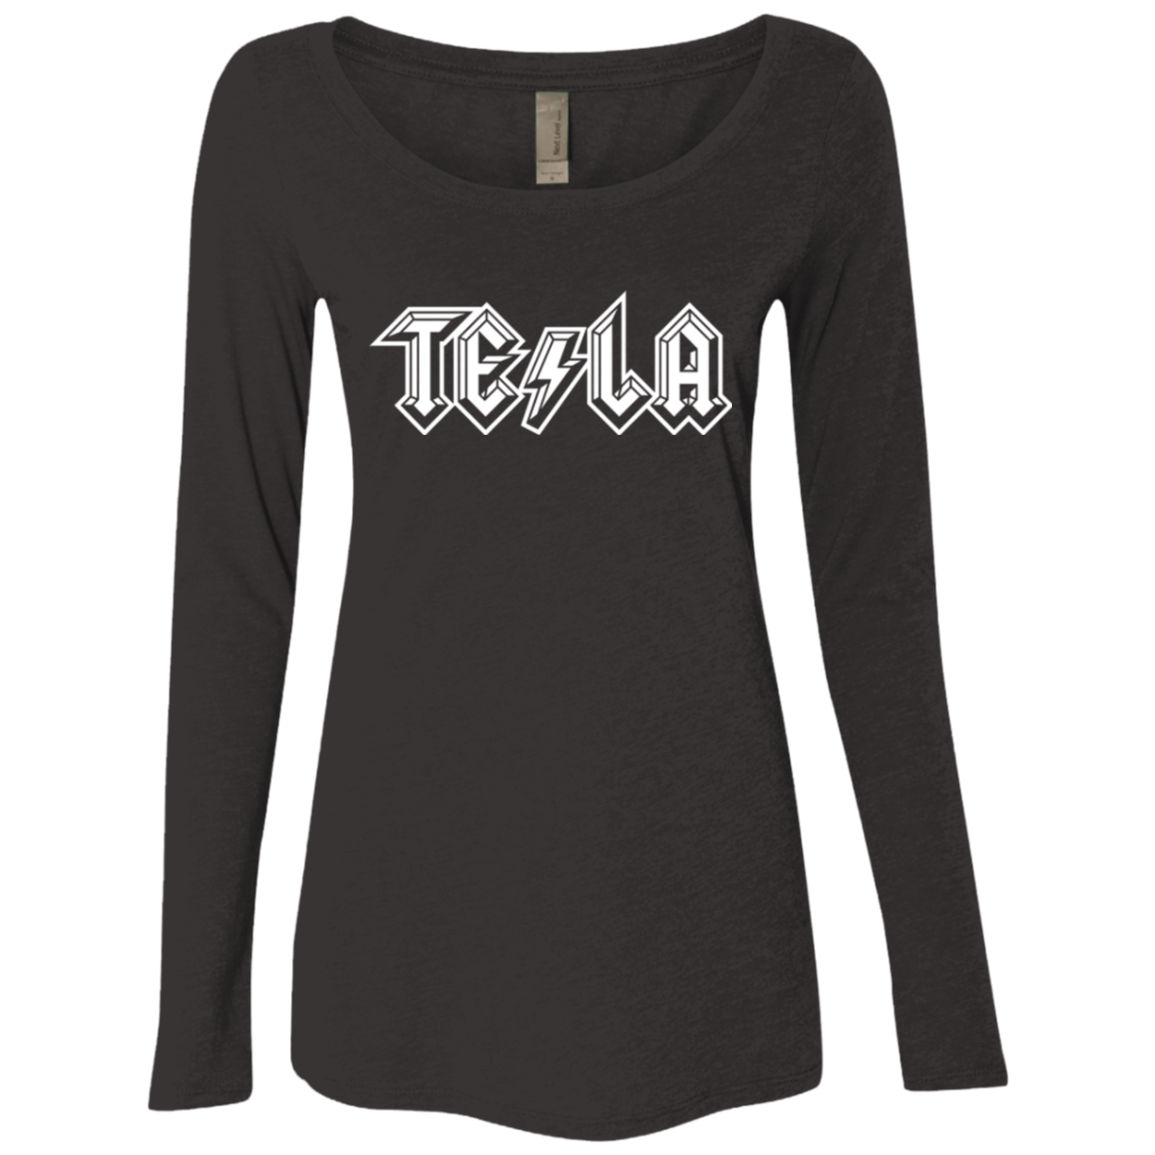 TESLA Women's Triblend Long Sleeve Shirt